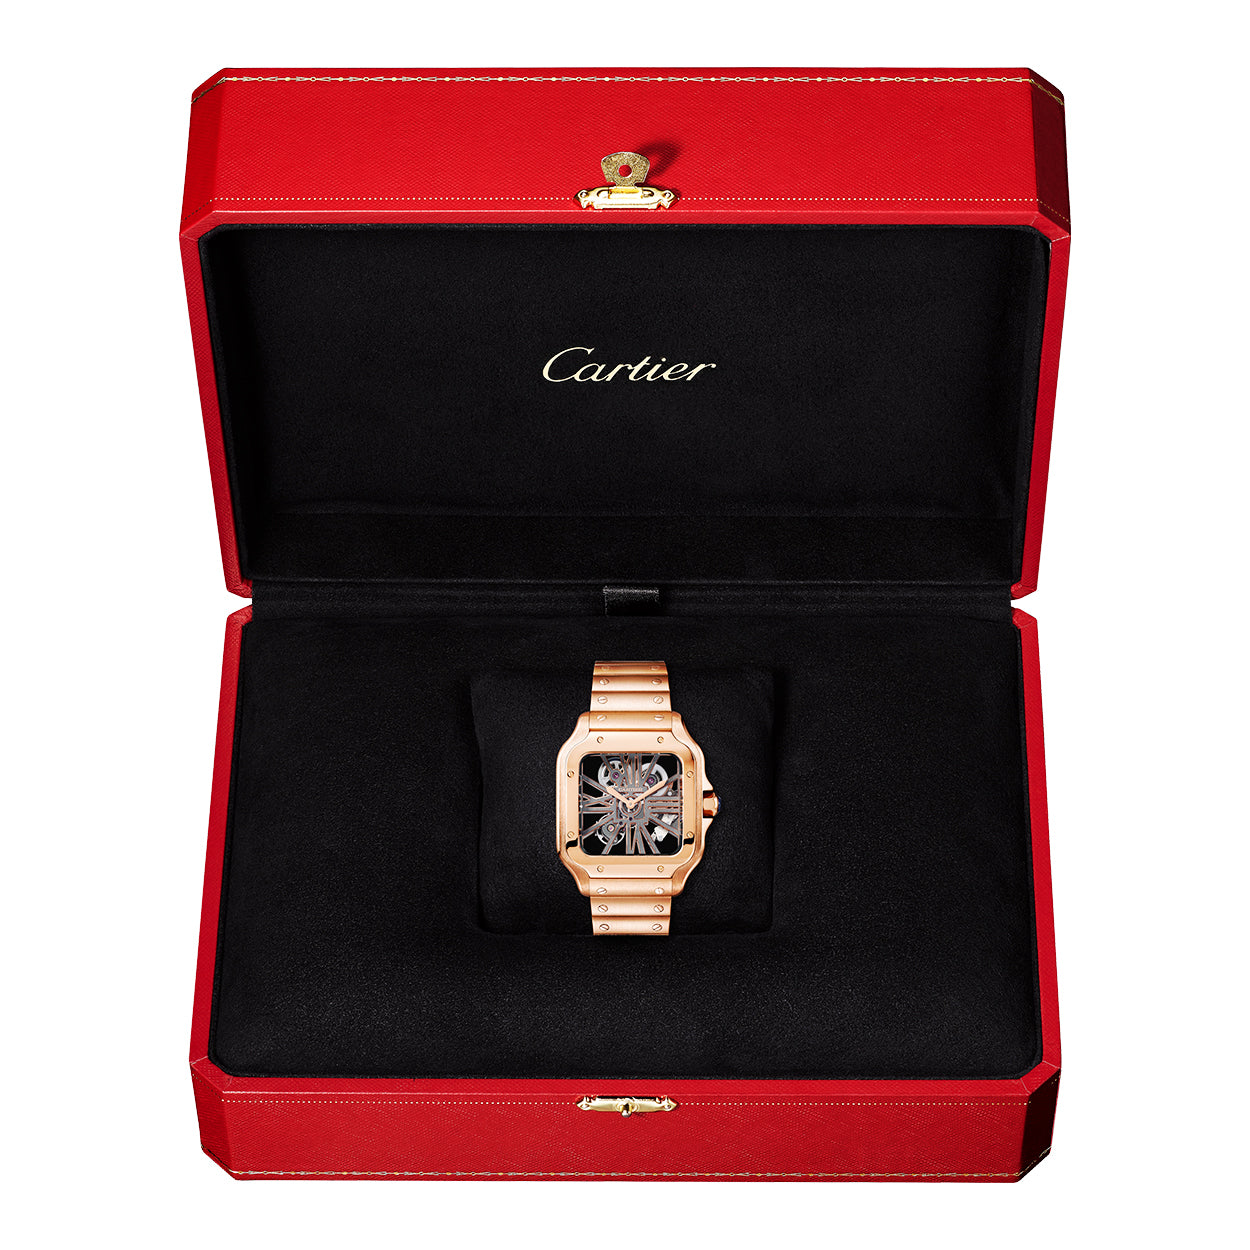 Santos de Cartier Large 18ct Rose Gold Men's Skeleton Dial Watch